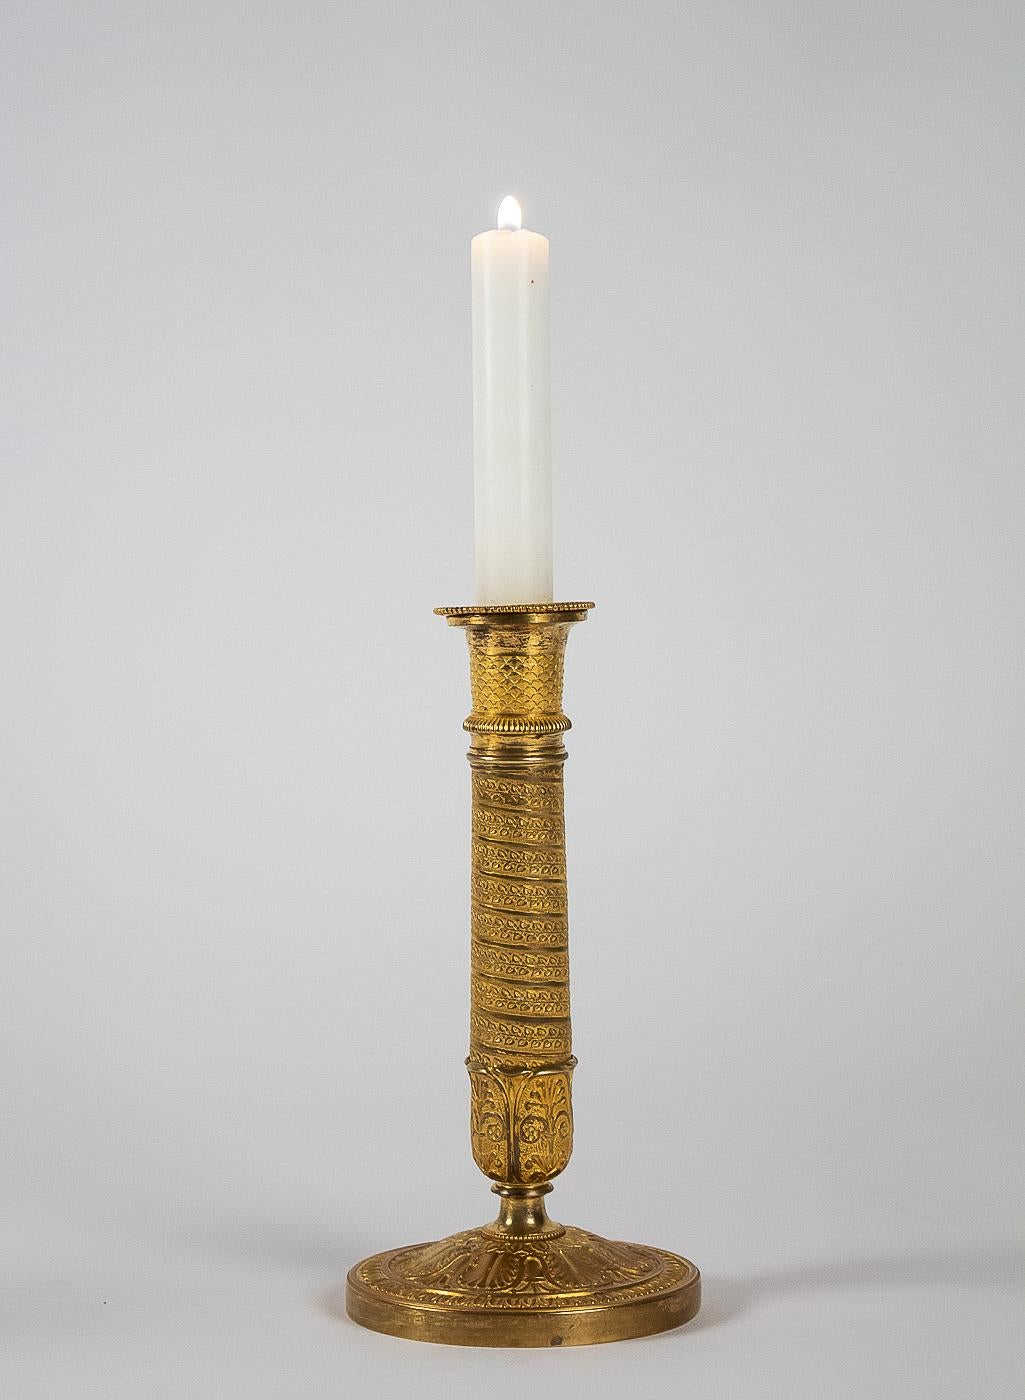 French Empire Period, Pair of Small Chiseled Gilt-Bronze Candlesticks Circa 1805 (Vergoldet)